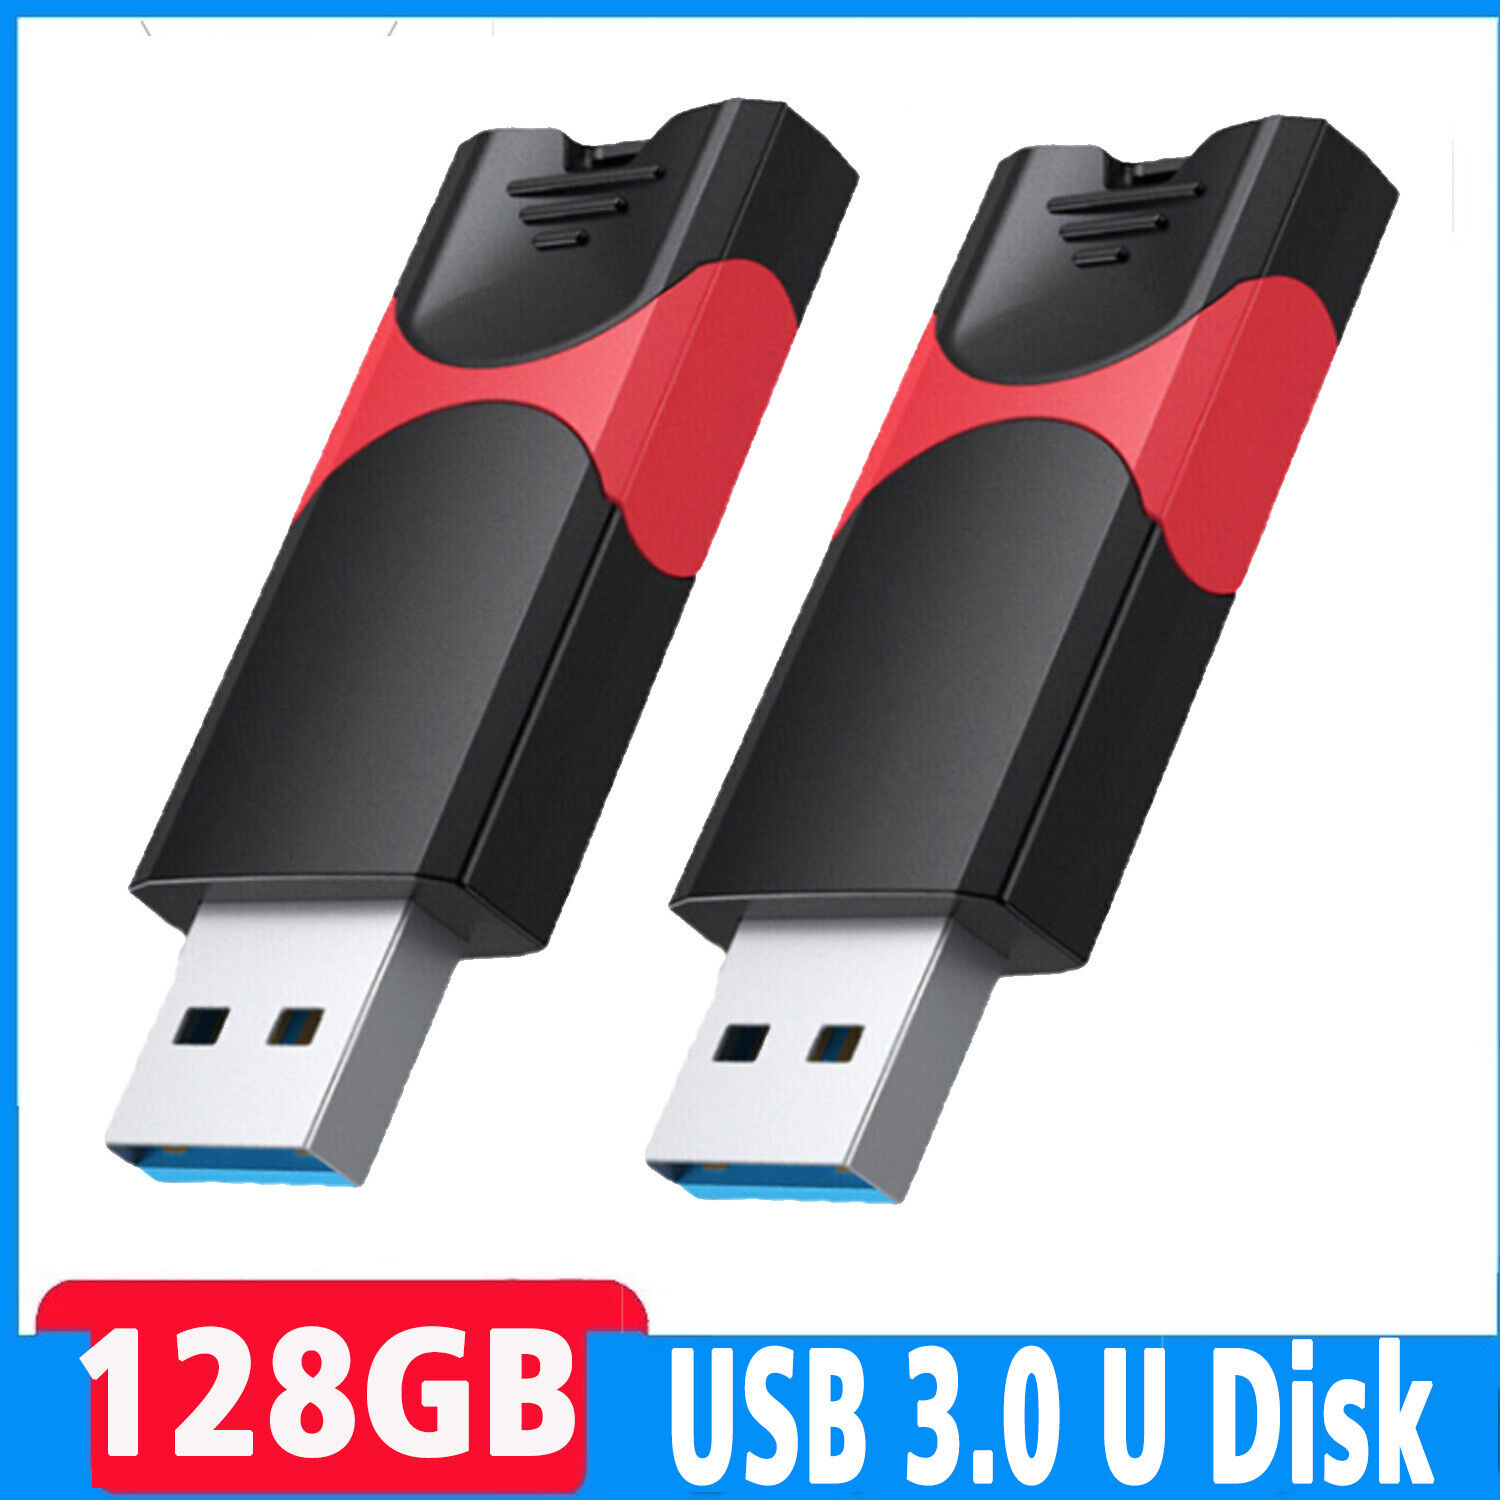 2x 128 GB USB 3.0 Flash Drive Thumb Drive Retractable Pen Drive for Data Storage